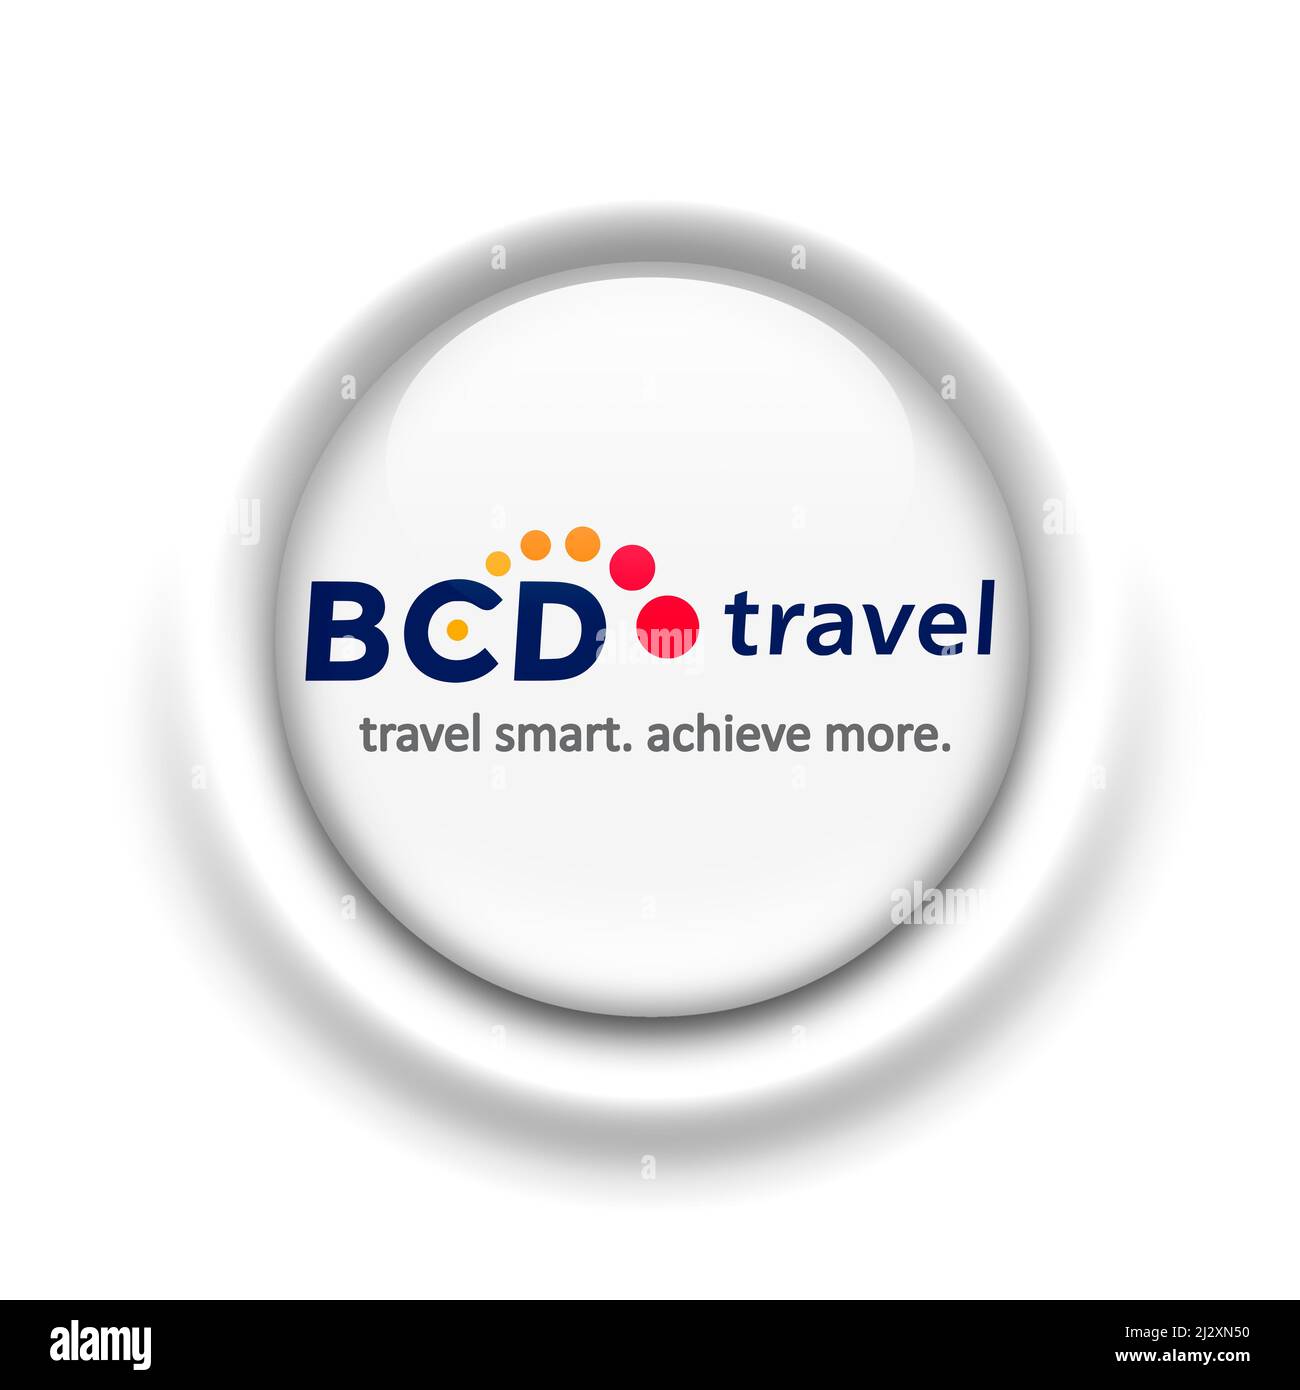 BCD travel logo Stock Photo